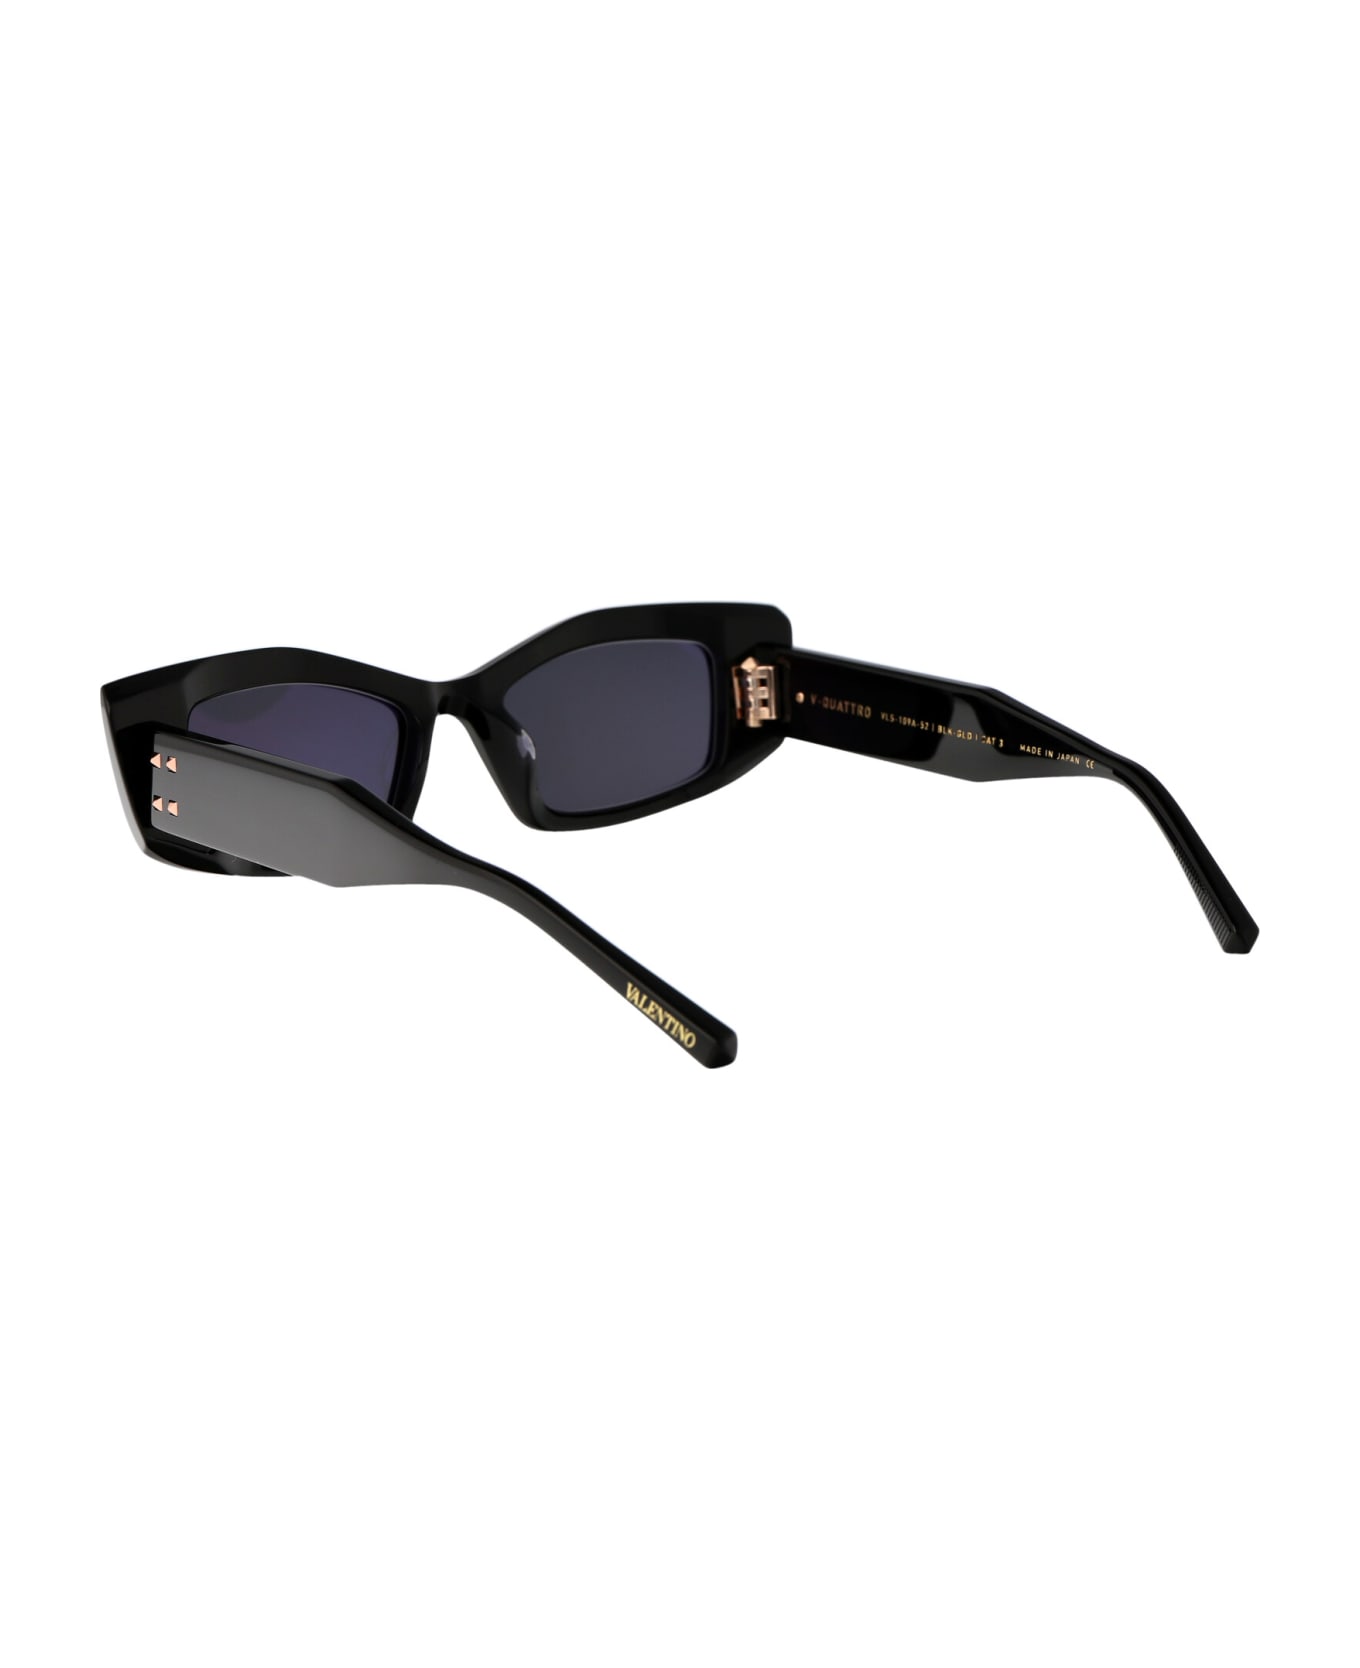 Valentino Eyewear V - Quattro Sunglasses - 109A BLK - GLD